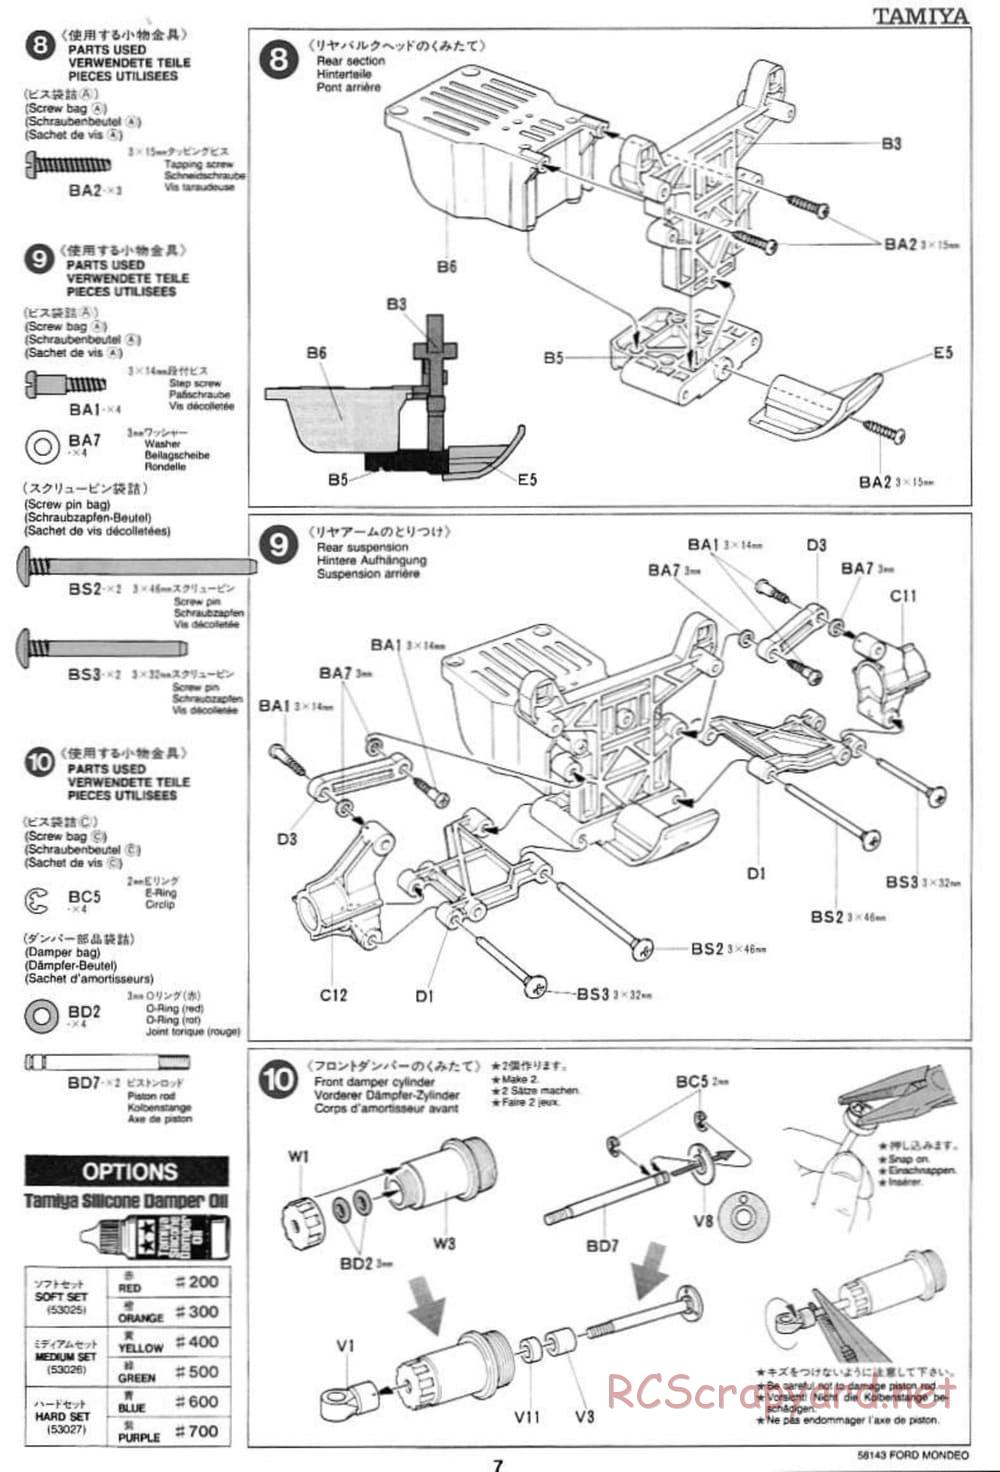 Tamiya - Ford Mondeo BTCC - FF-01 Chassis - Manual - Page 7